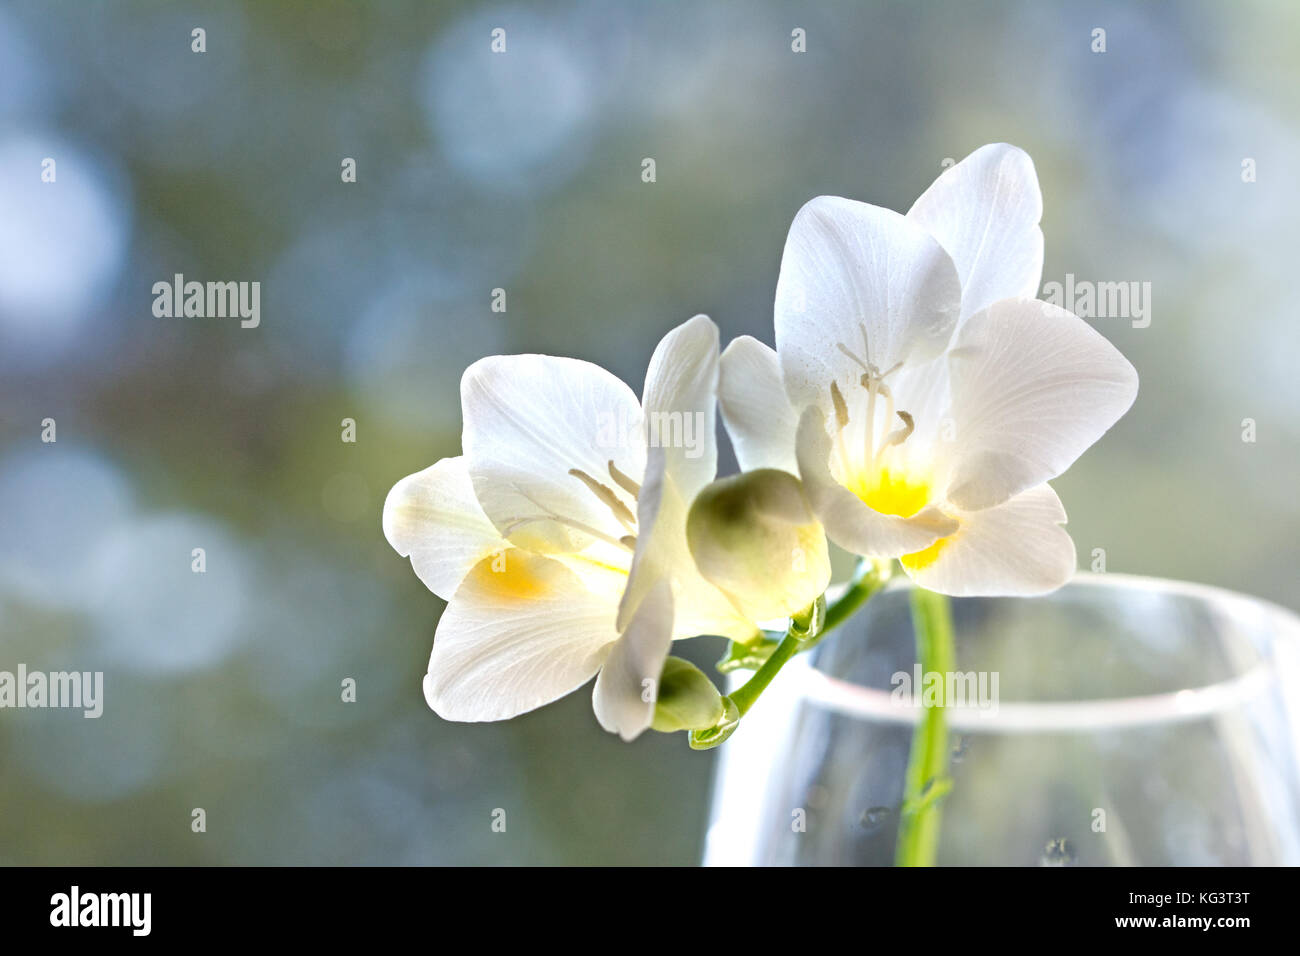 Delicada flor de fresia blanca en suave luz natural - closeup Fotografía de  stock - Alamy